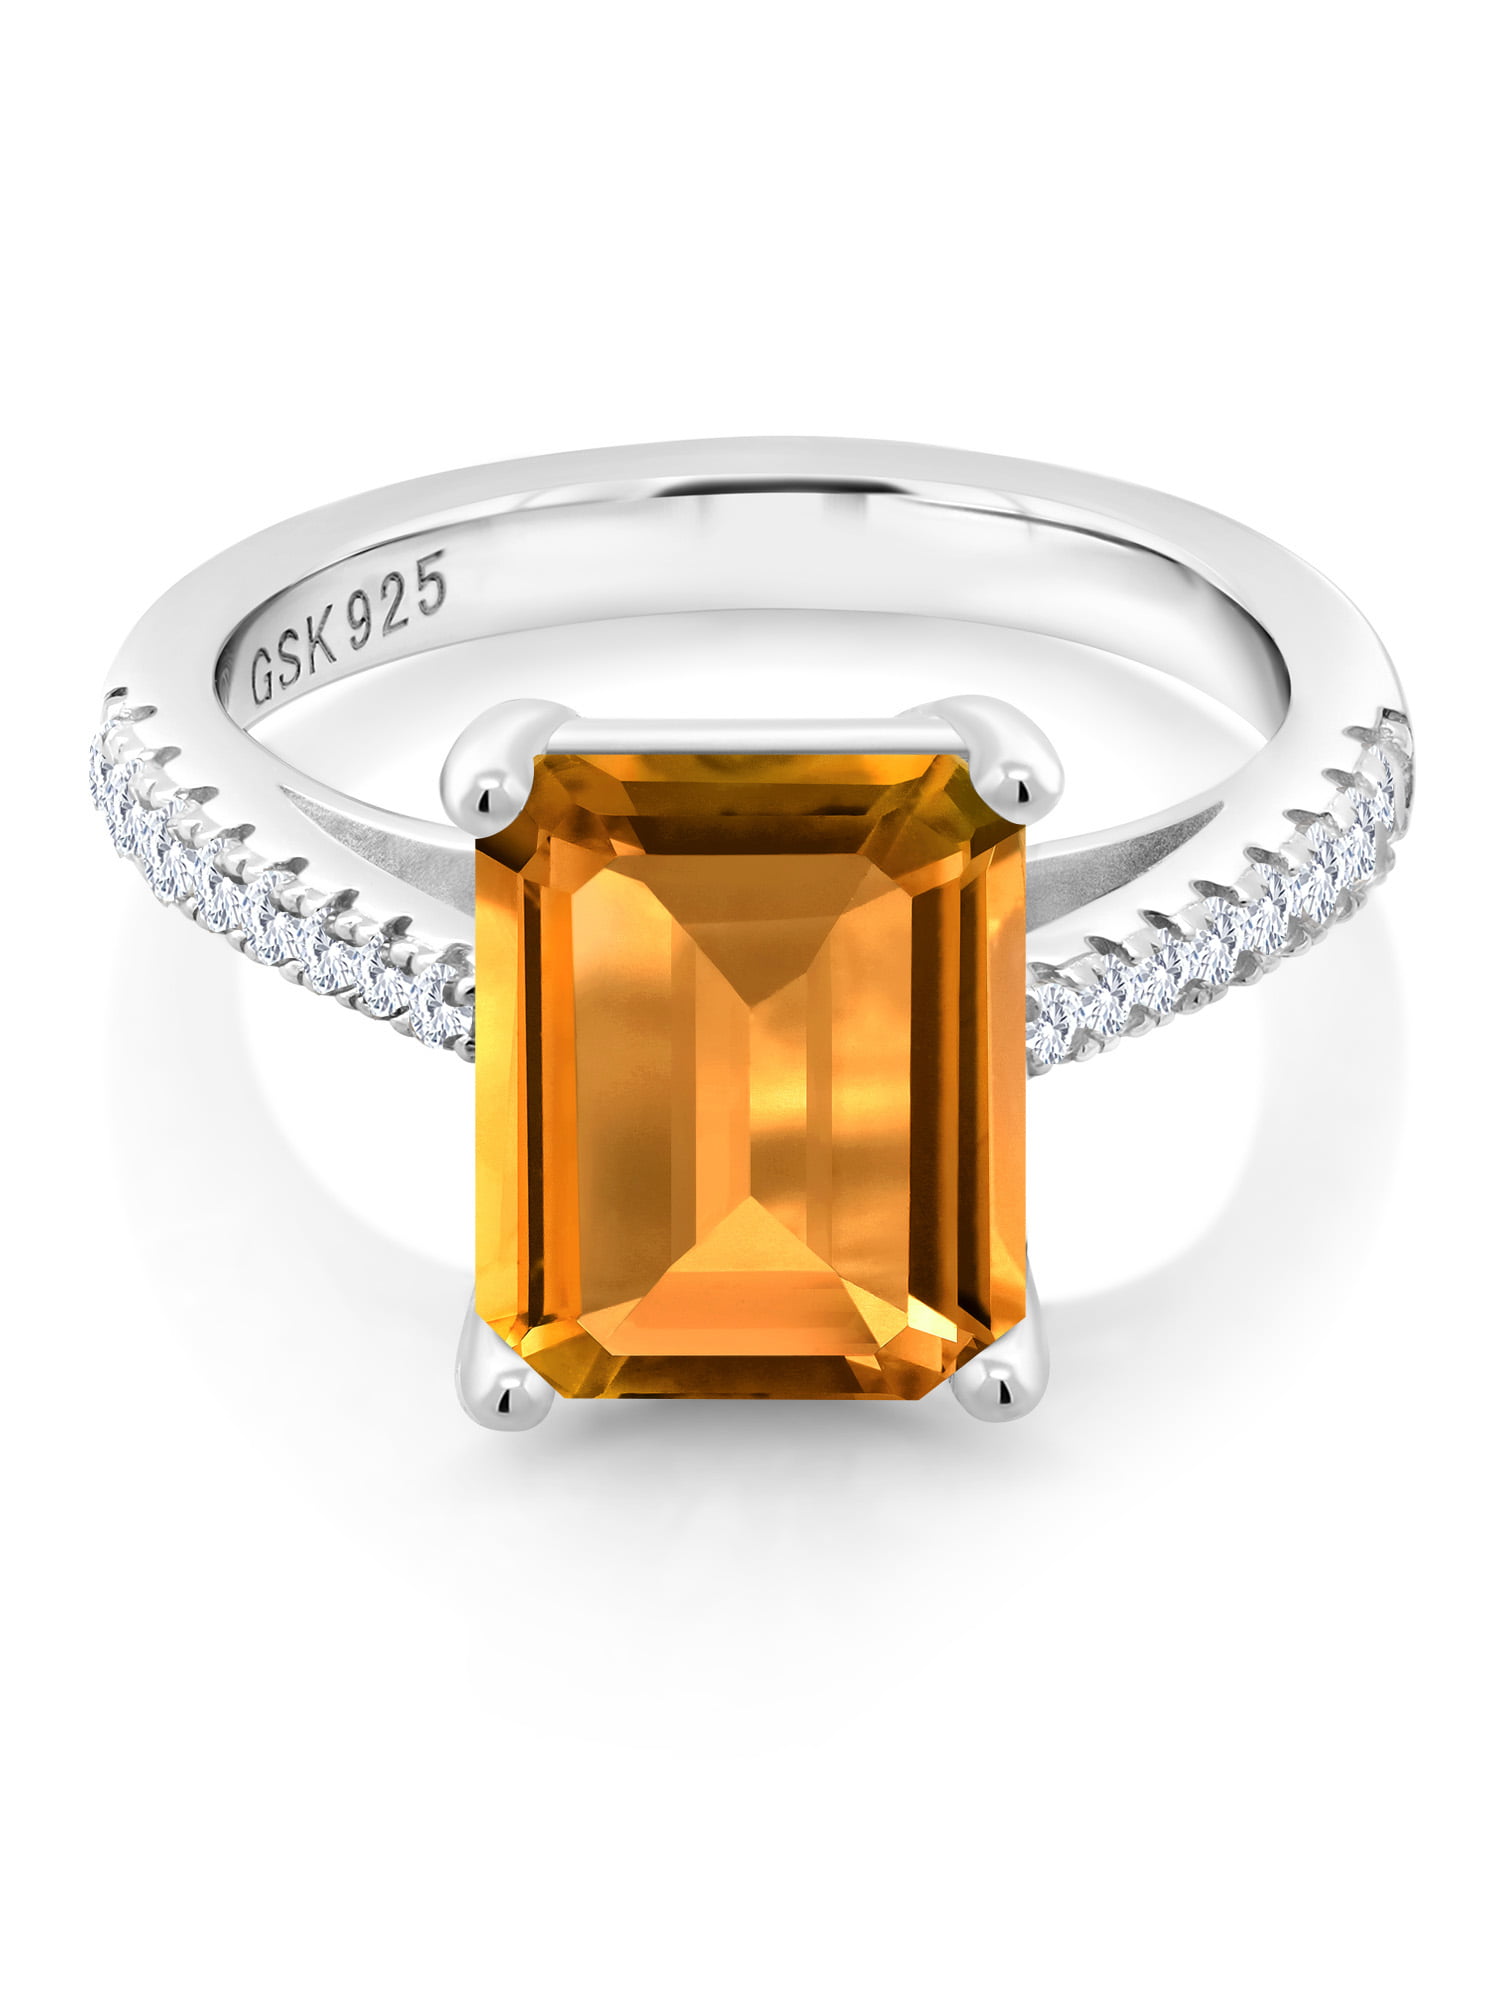 Luxury Oval Cut Citrine Women 925 Silver Jewelry Wedding Ring Size 6-10 